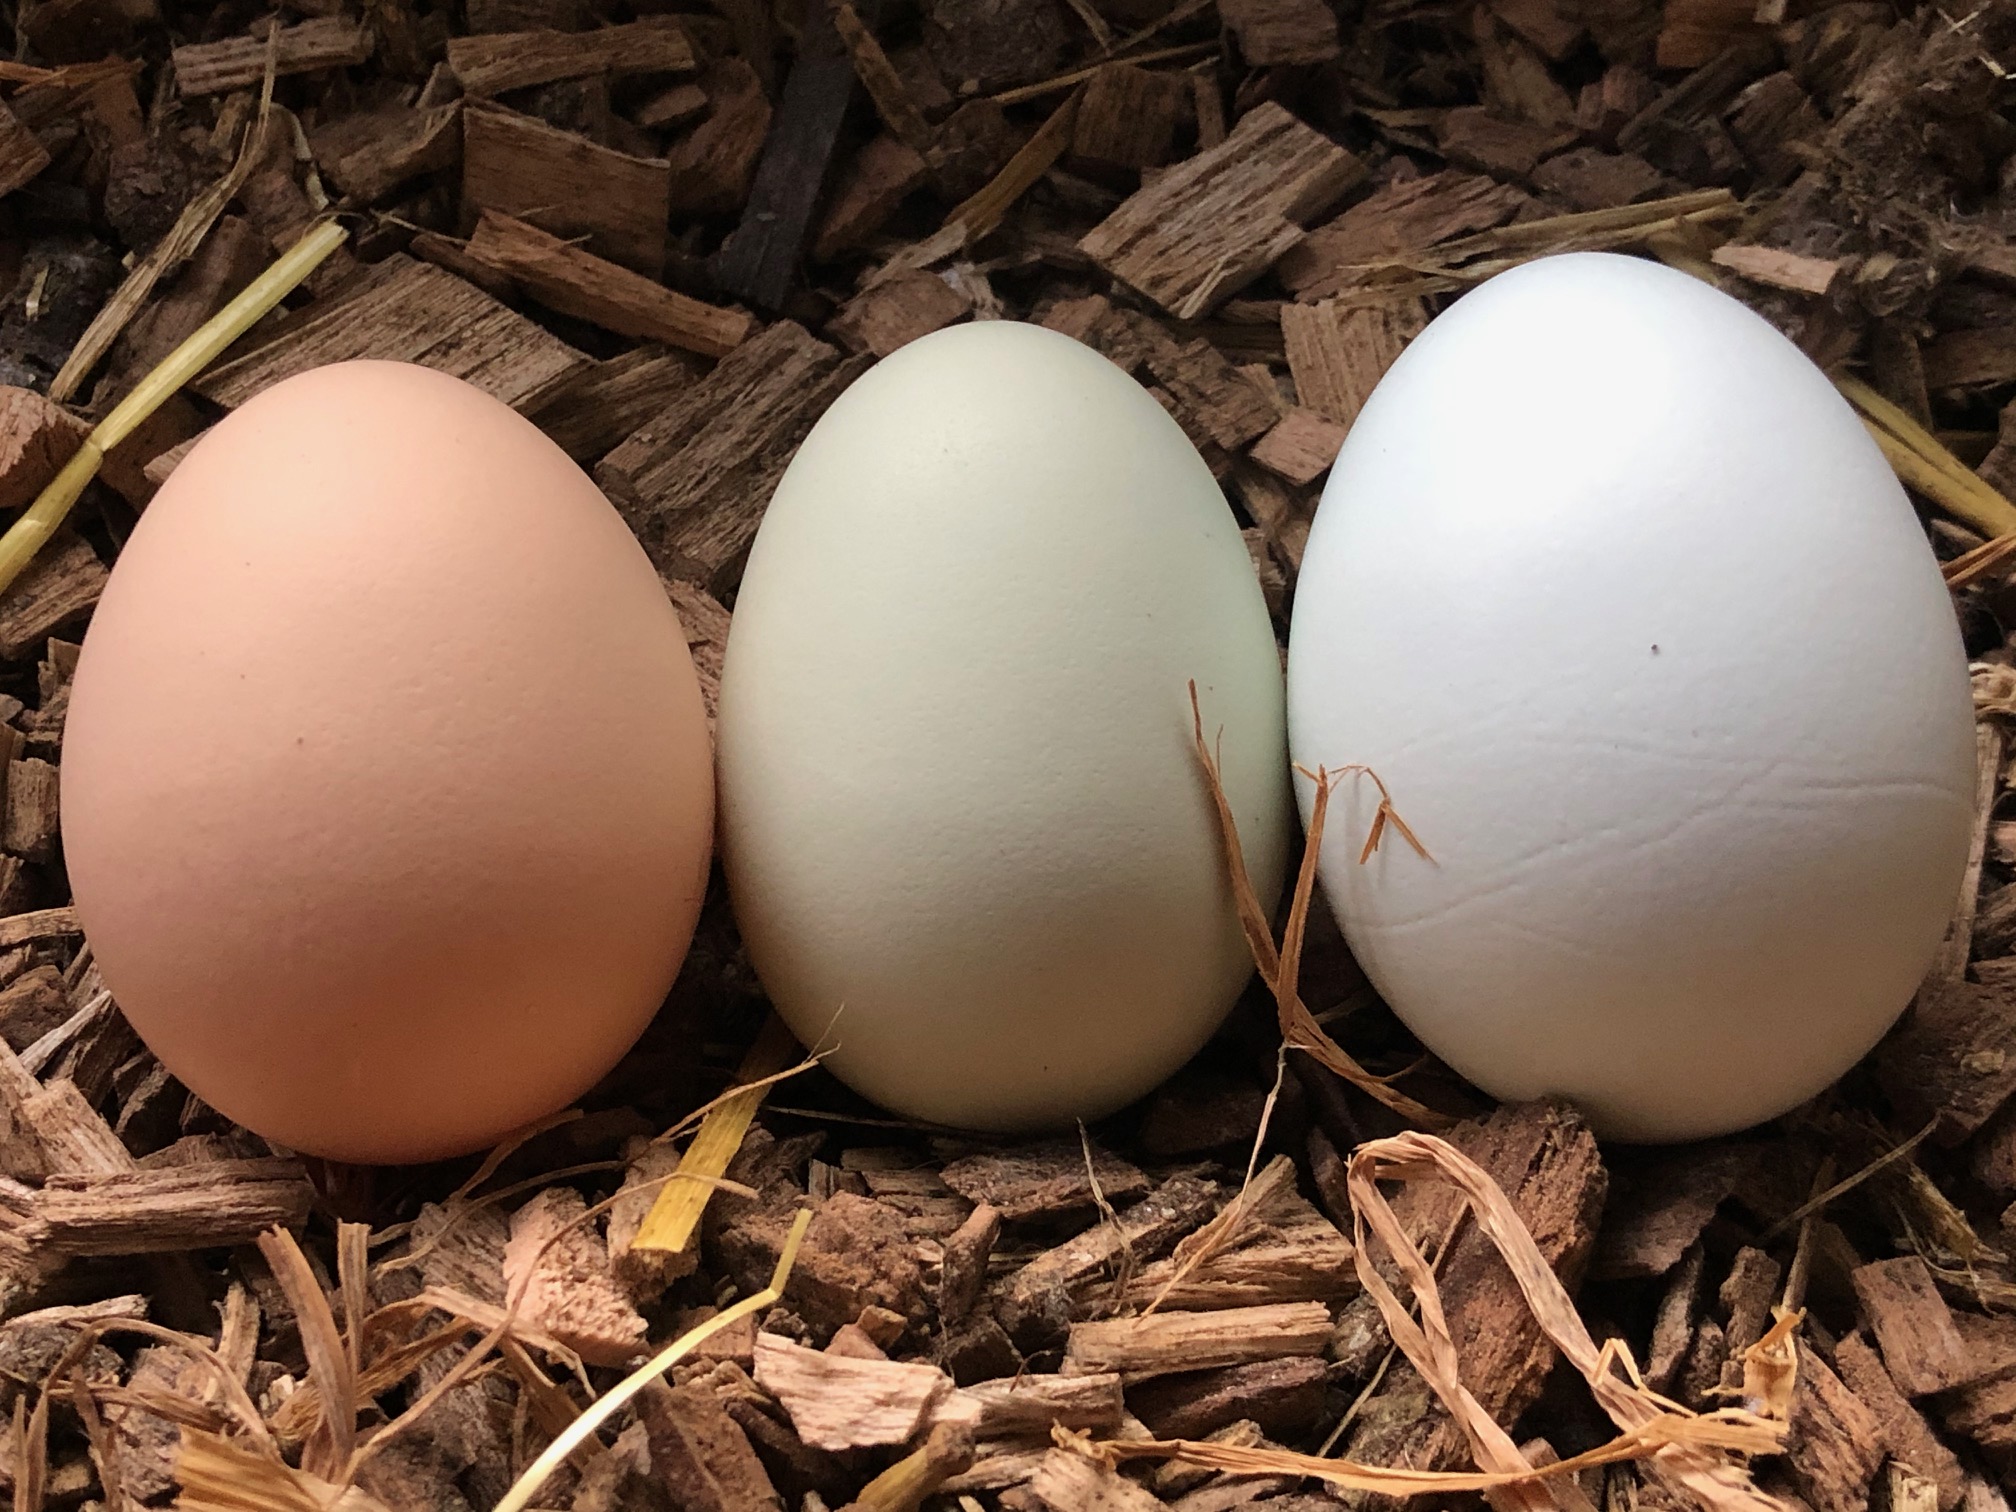 colourful eggs